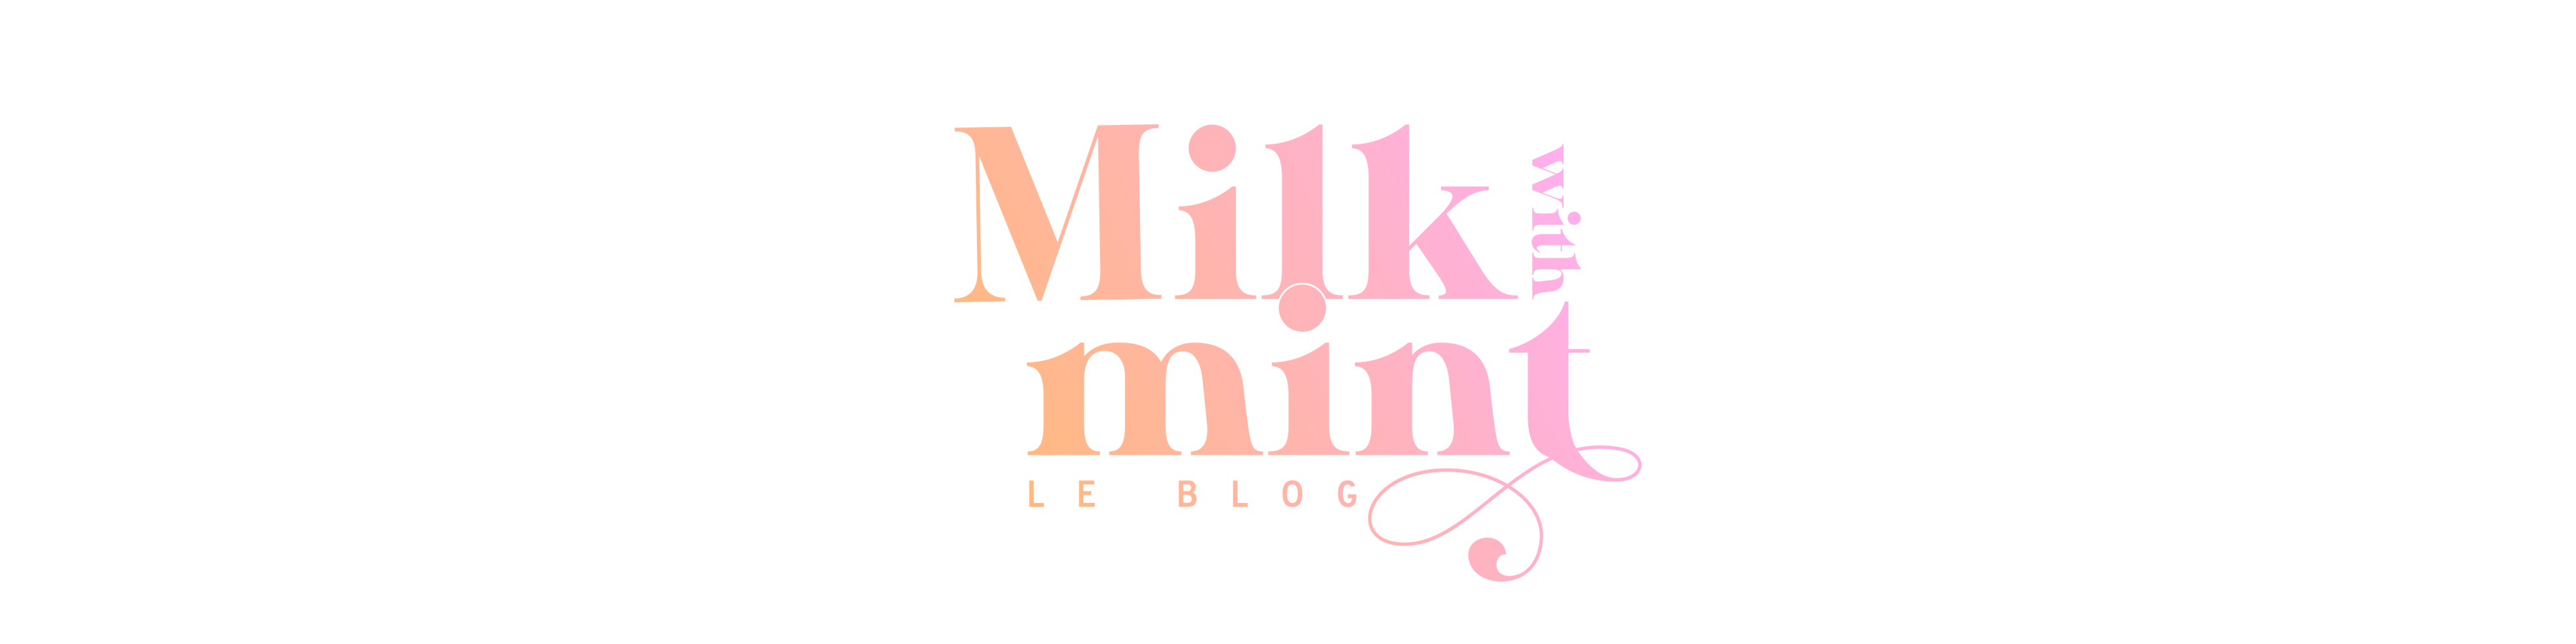 Milk with mint